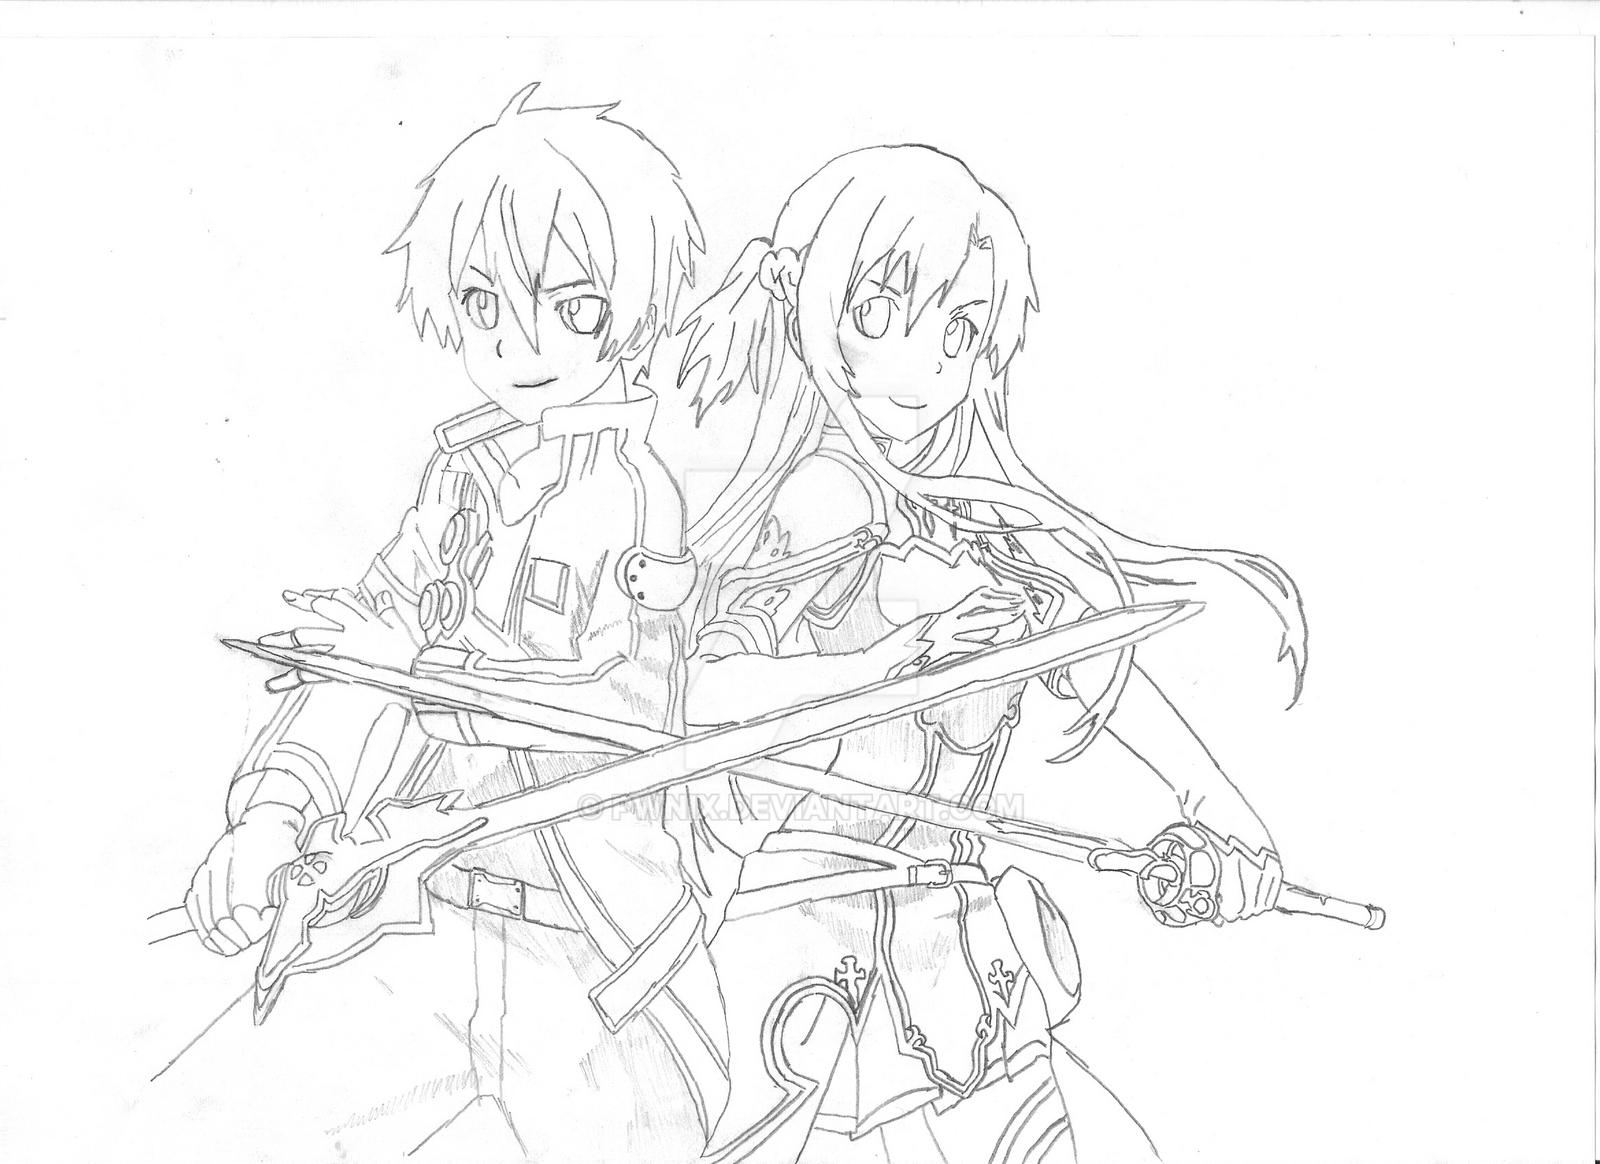 Kirito And Asuna   Sword Art Online by pwnix on DeviantArt